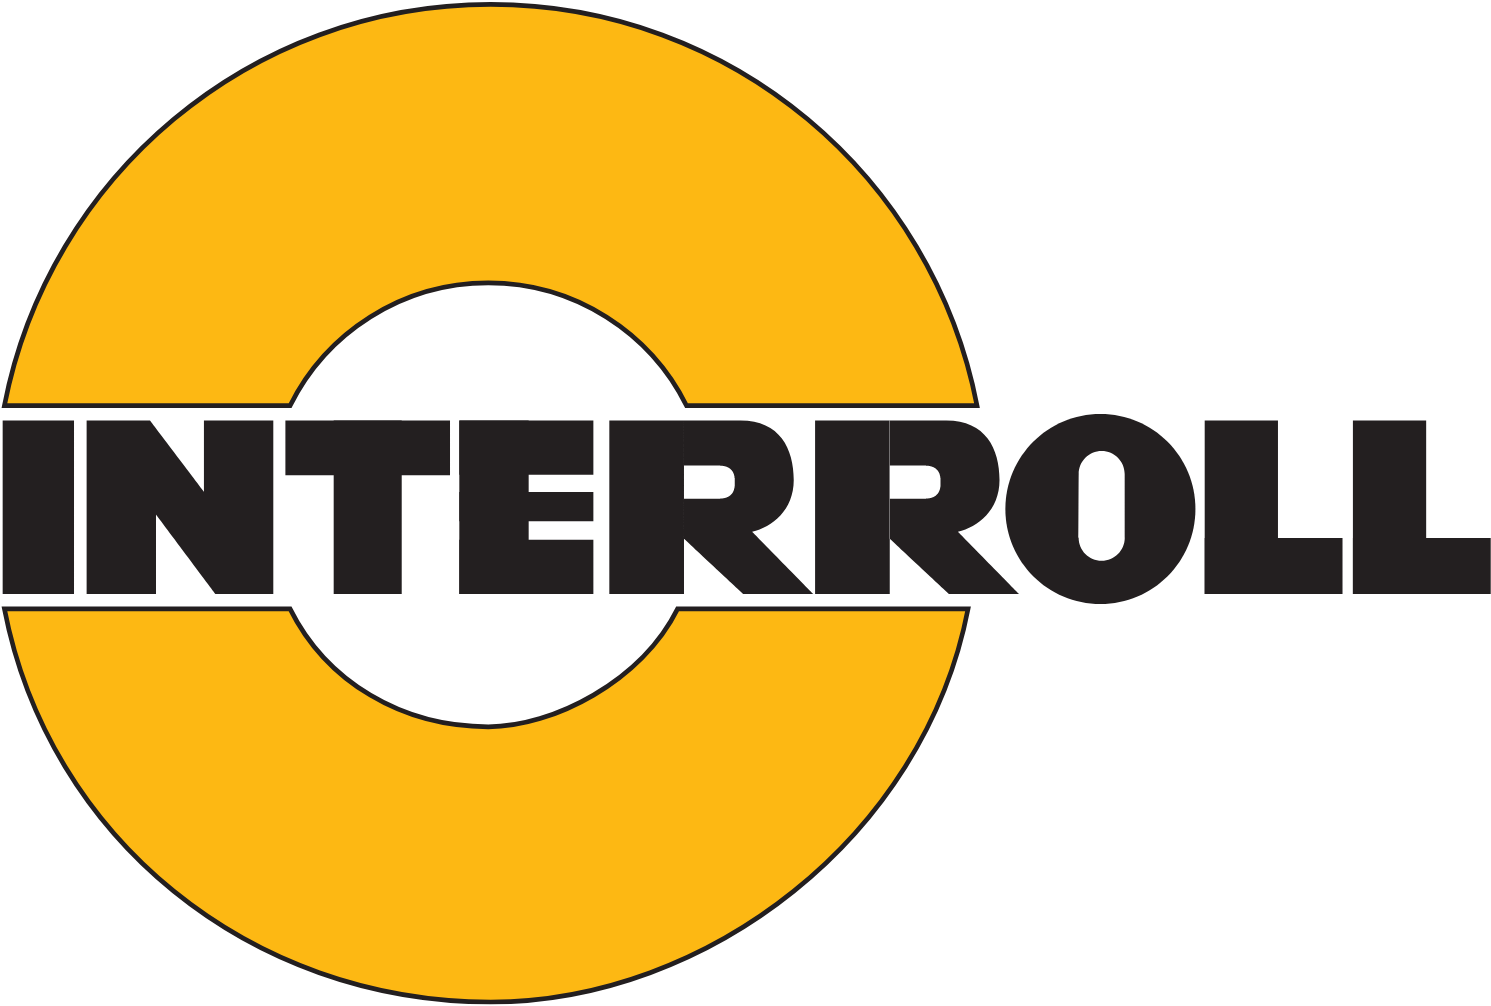 Interroll logo large (transparent PNG)